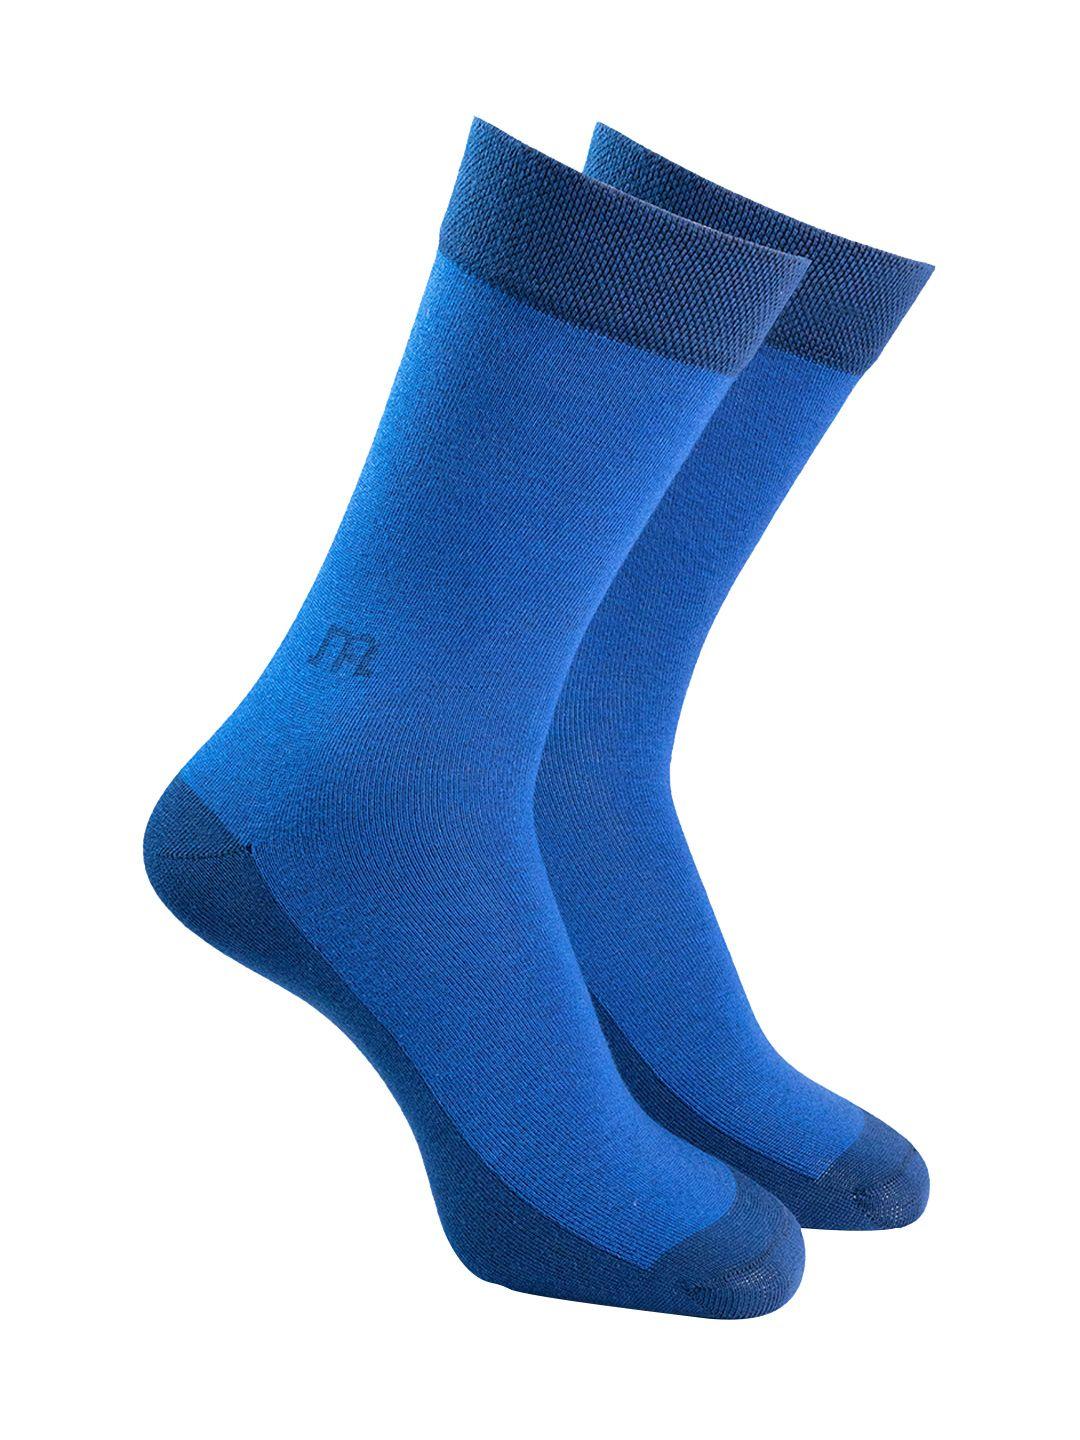 man-arden-men-navy-blue-&-black-patterned-calf-length-cotton-socks